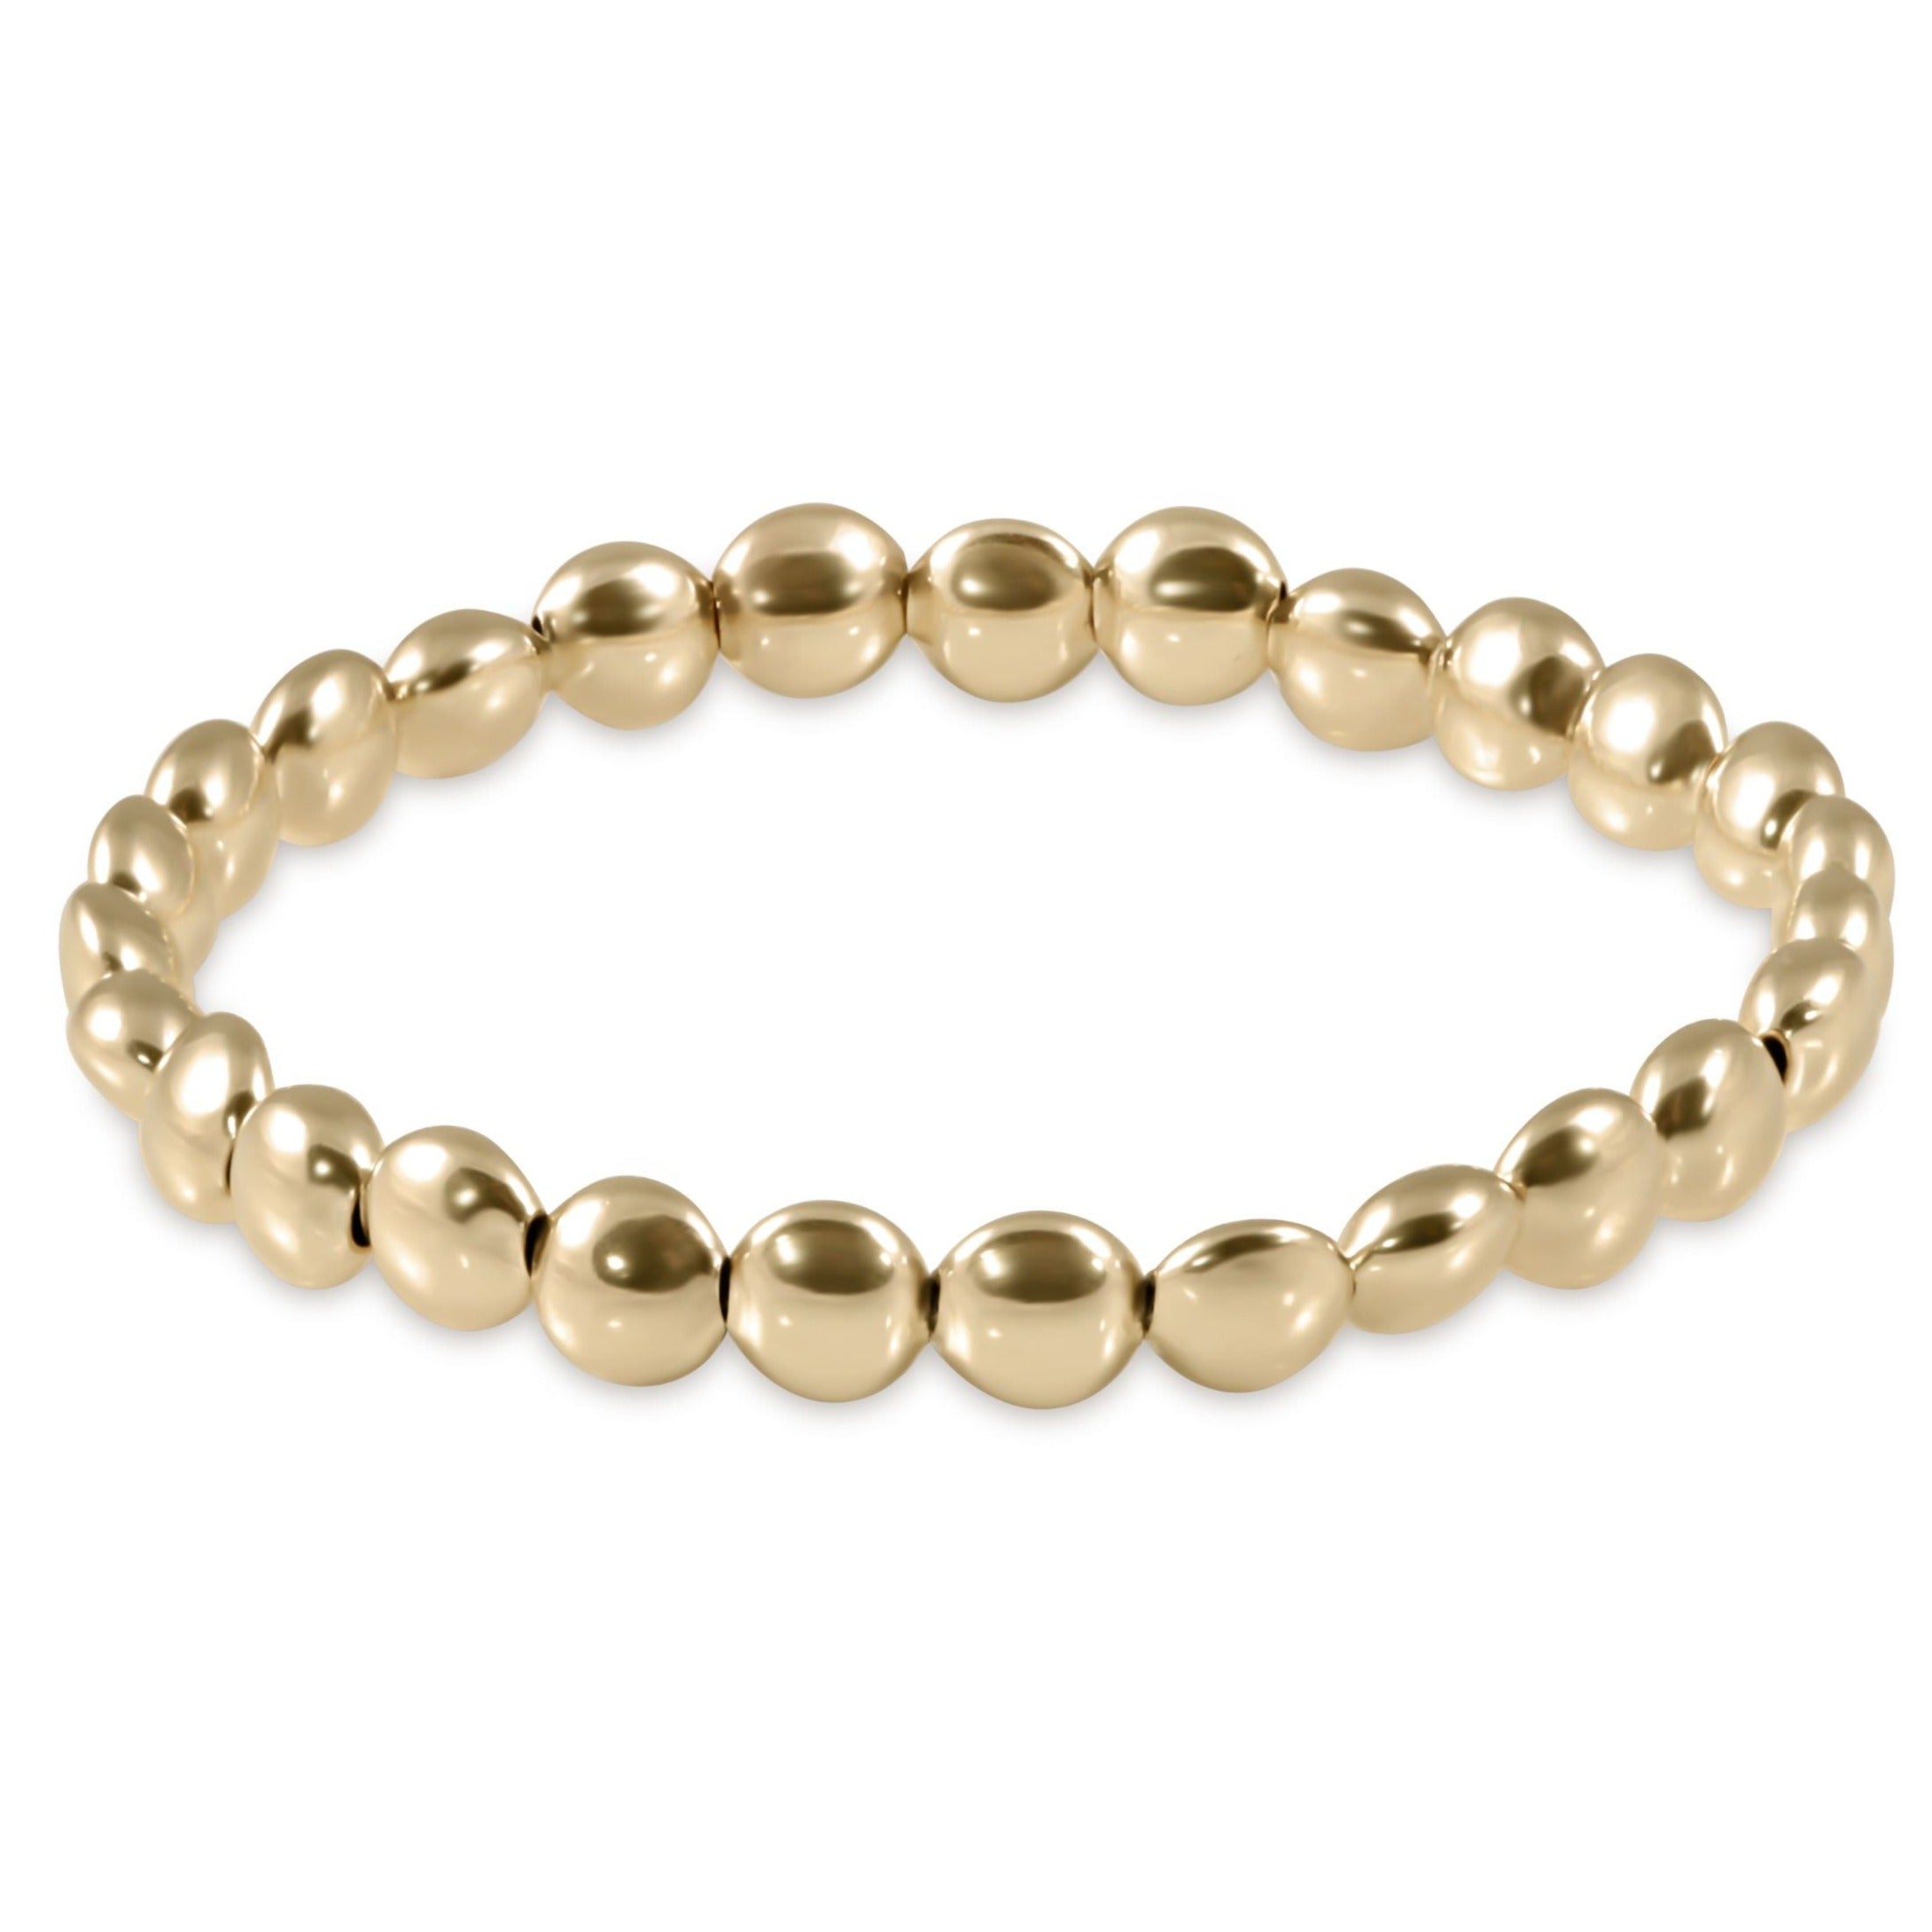 enewton extends - honesty gold 6mm bead bracelet